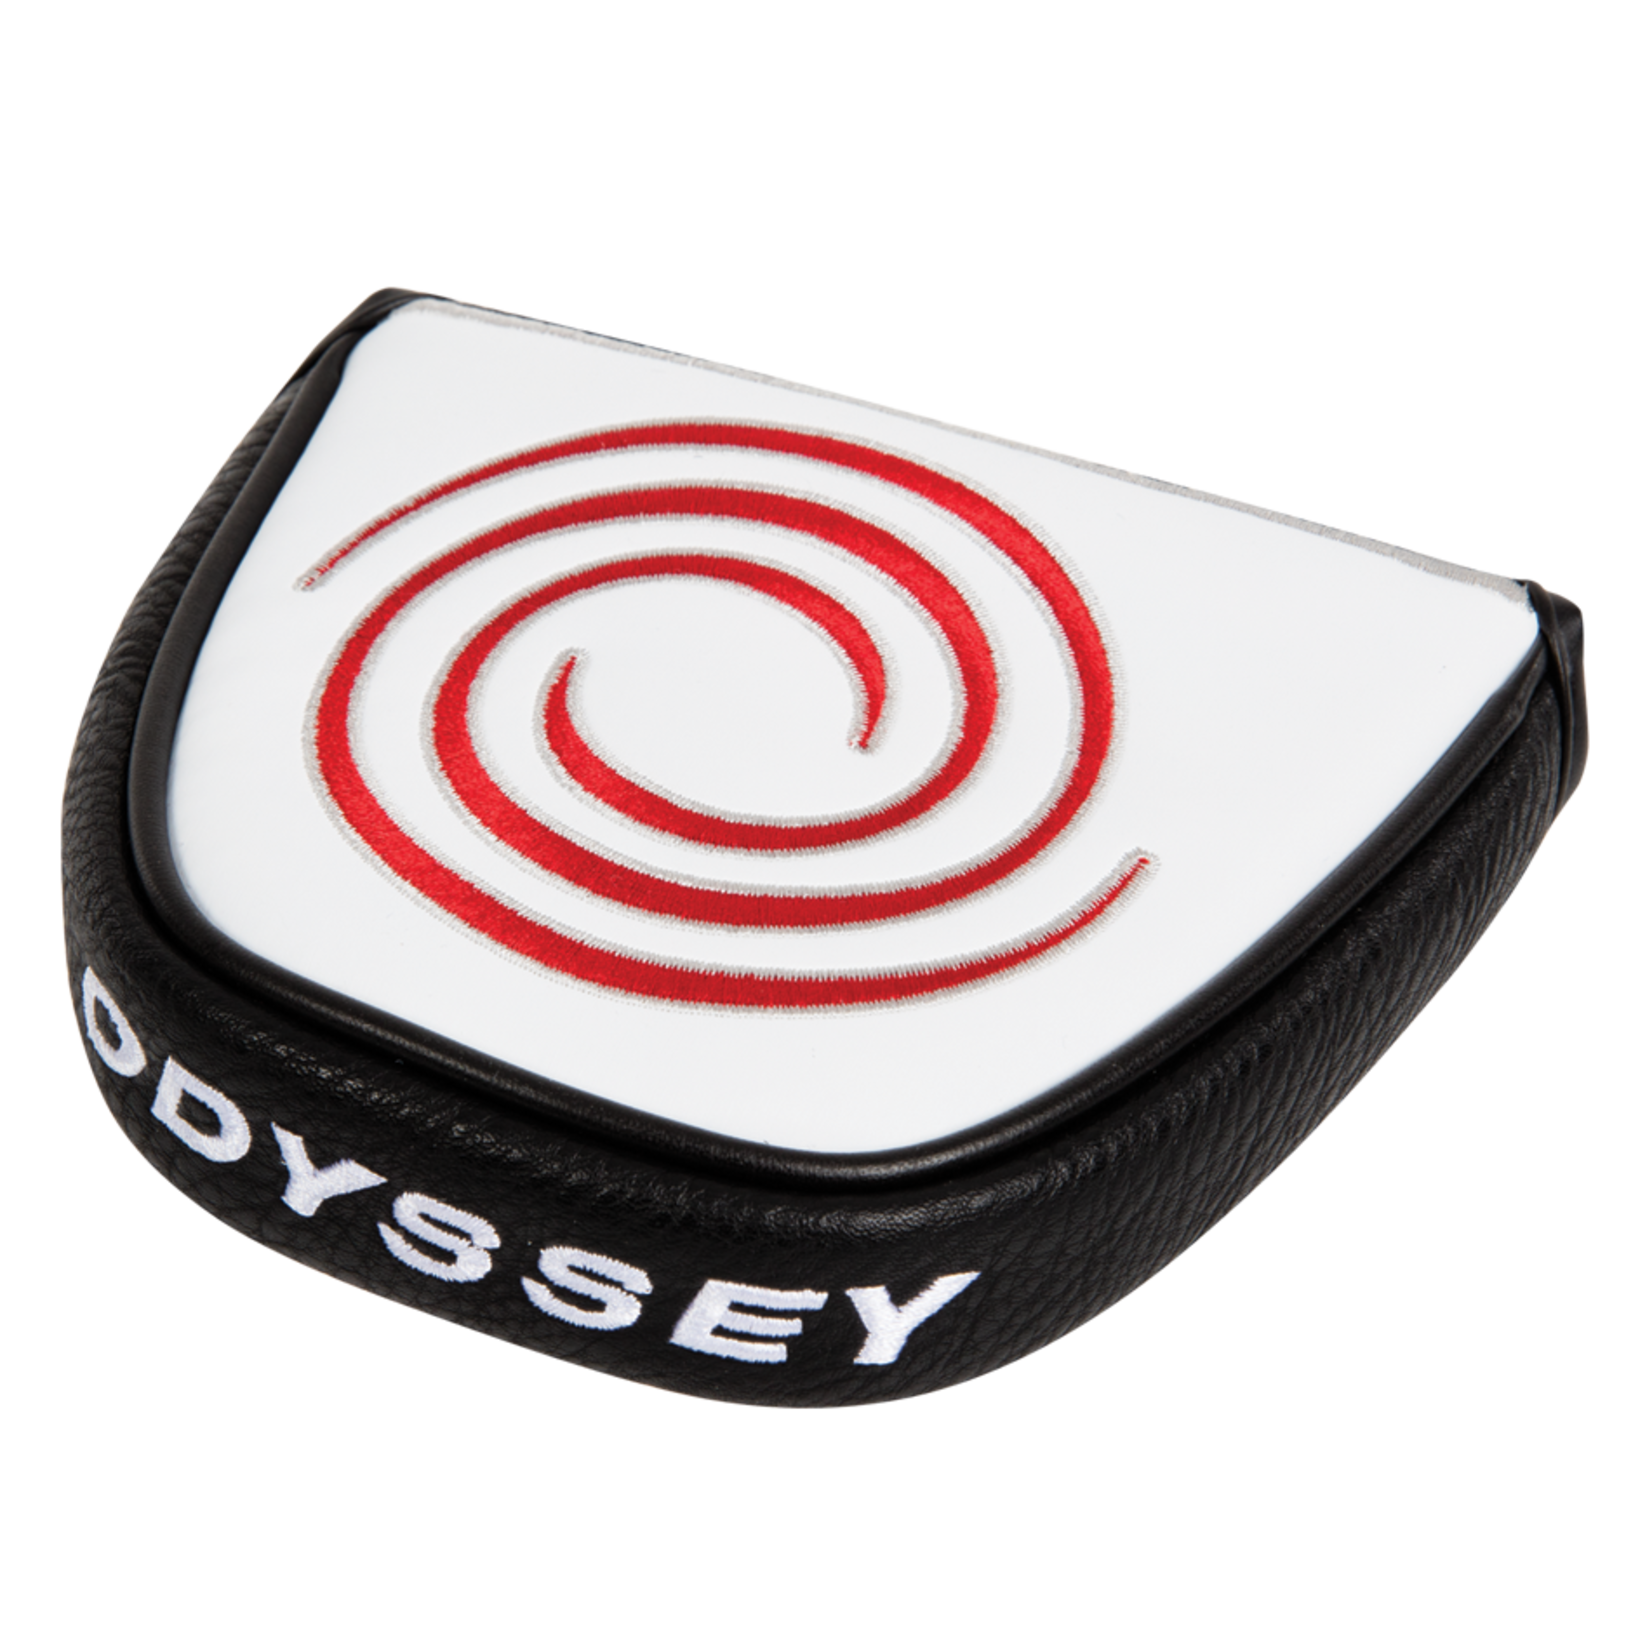 Odyssey Odyssey Mallet puttercover